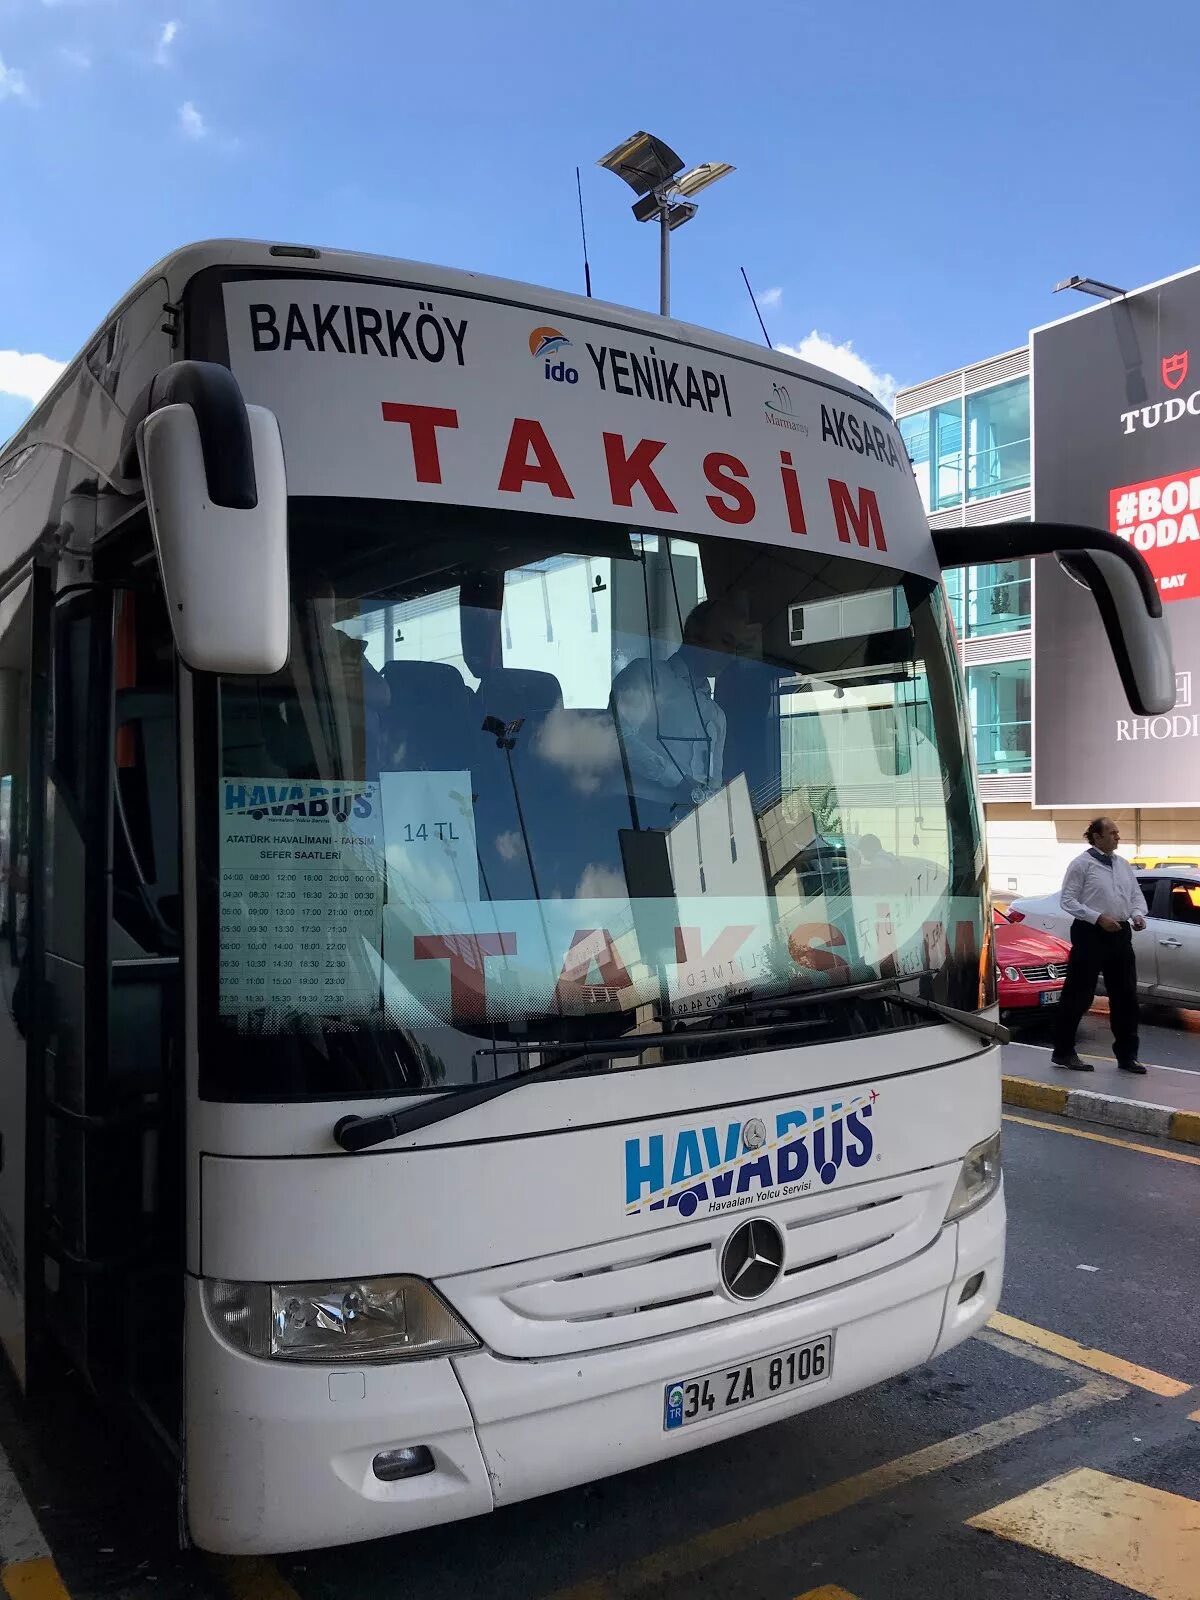 Аэропорт стамбул таксим. HAVABUS Стамбул Сабиха. Автобус от аэропорта Стамбула. Хаваш автобус в Стамбуле. Автобус до Таксим Стамбуле.